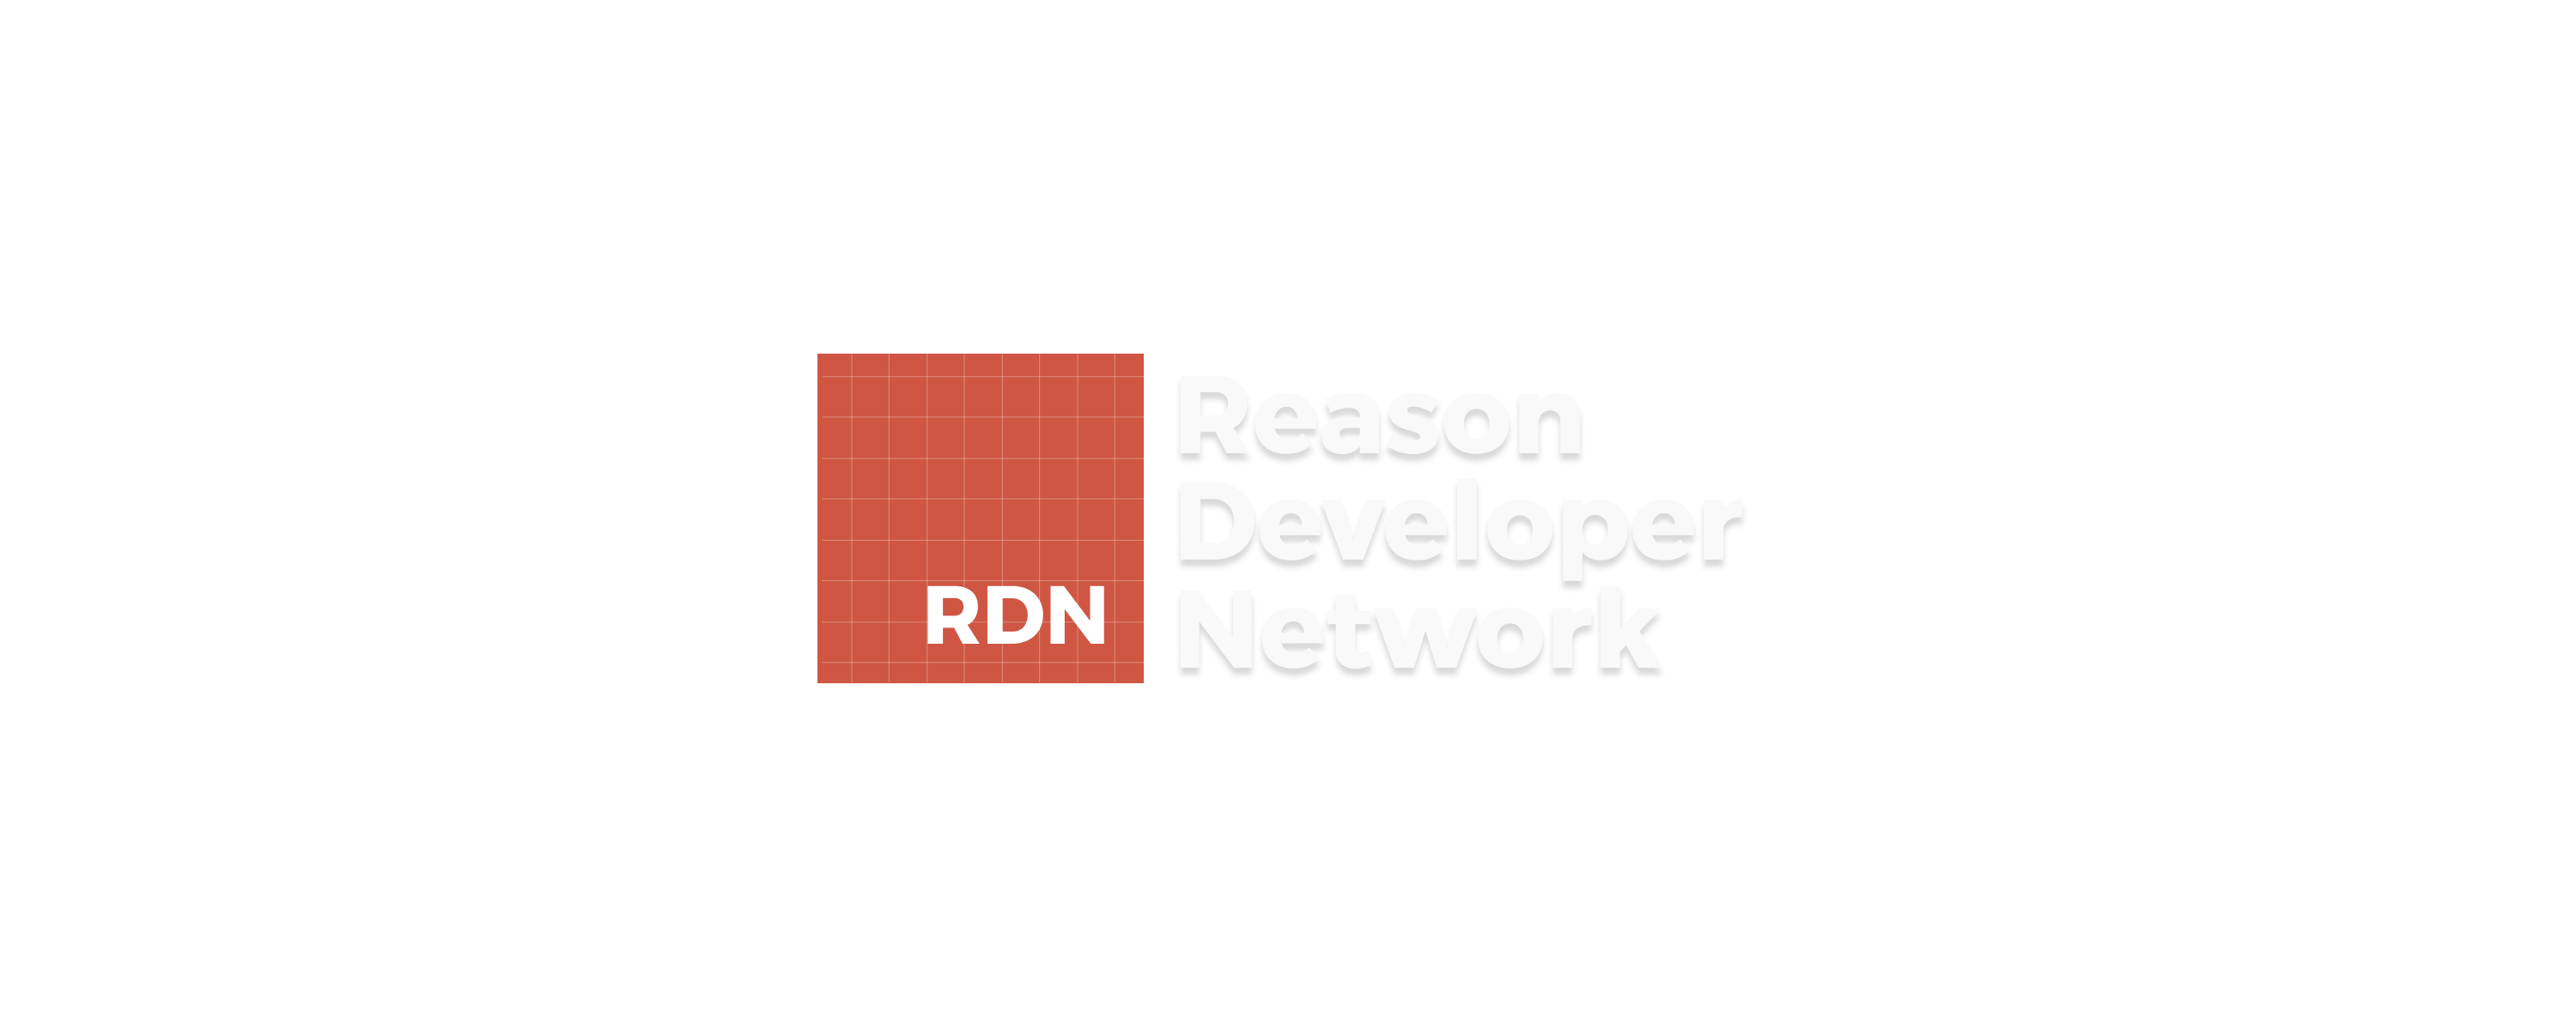 Reason Developer Network